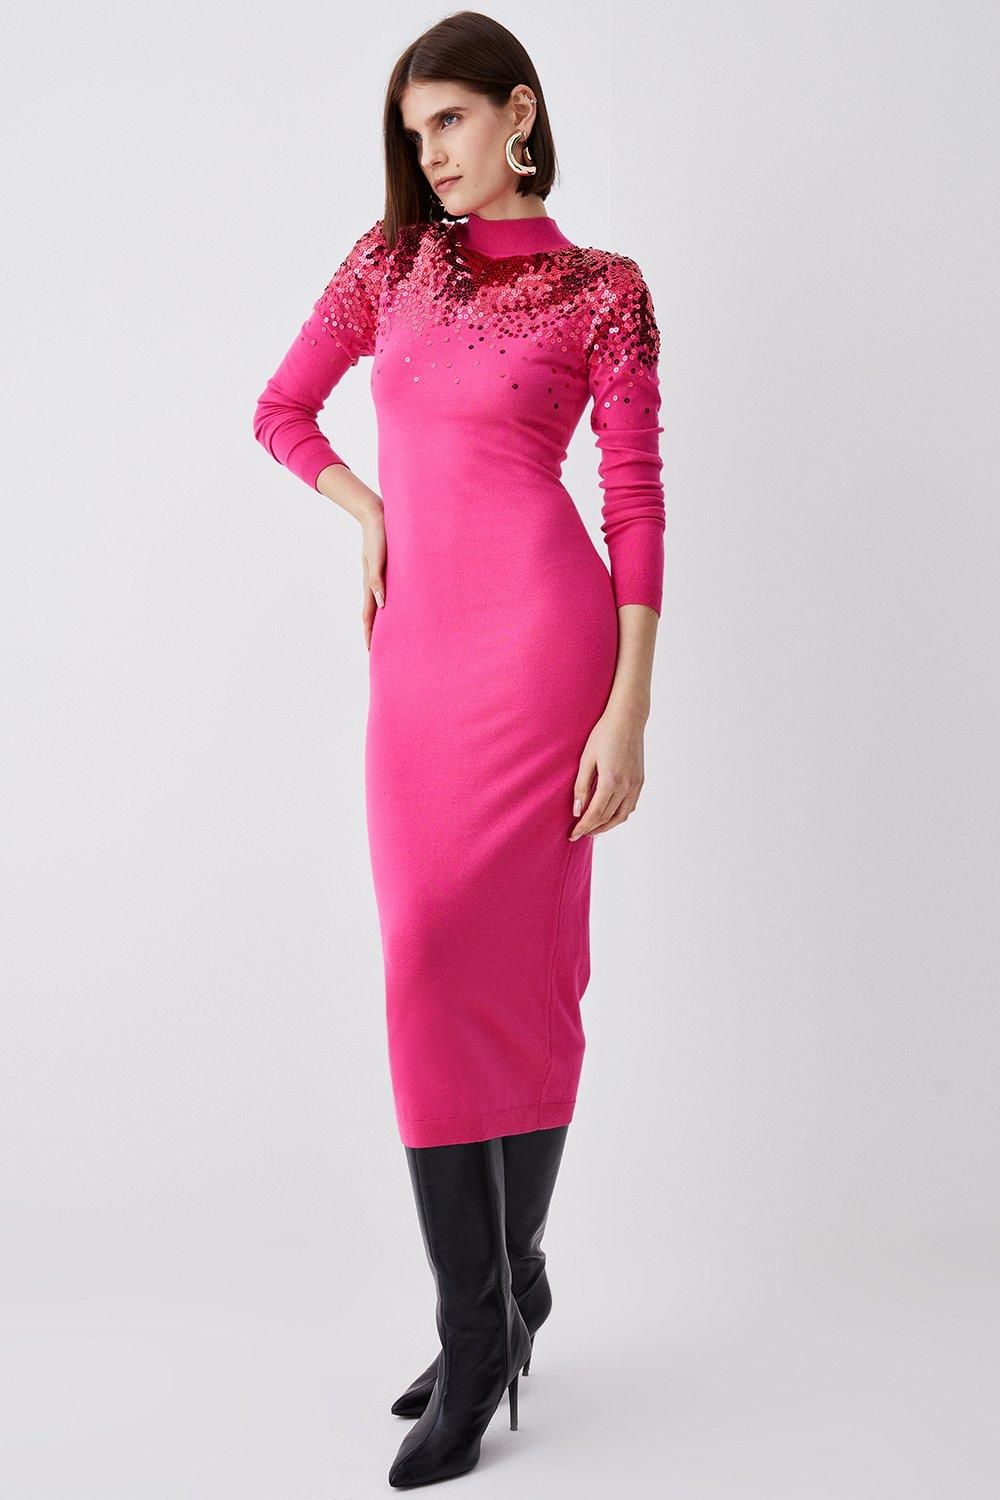 Sequin Knit Pencil Dress | Karen Millen US